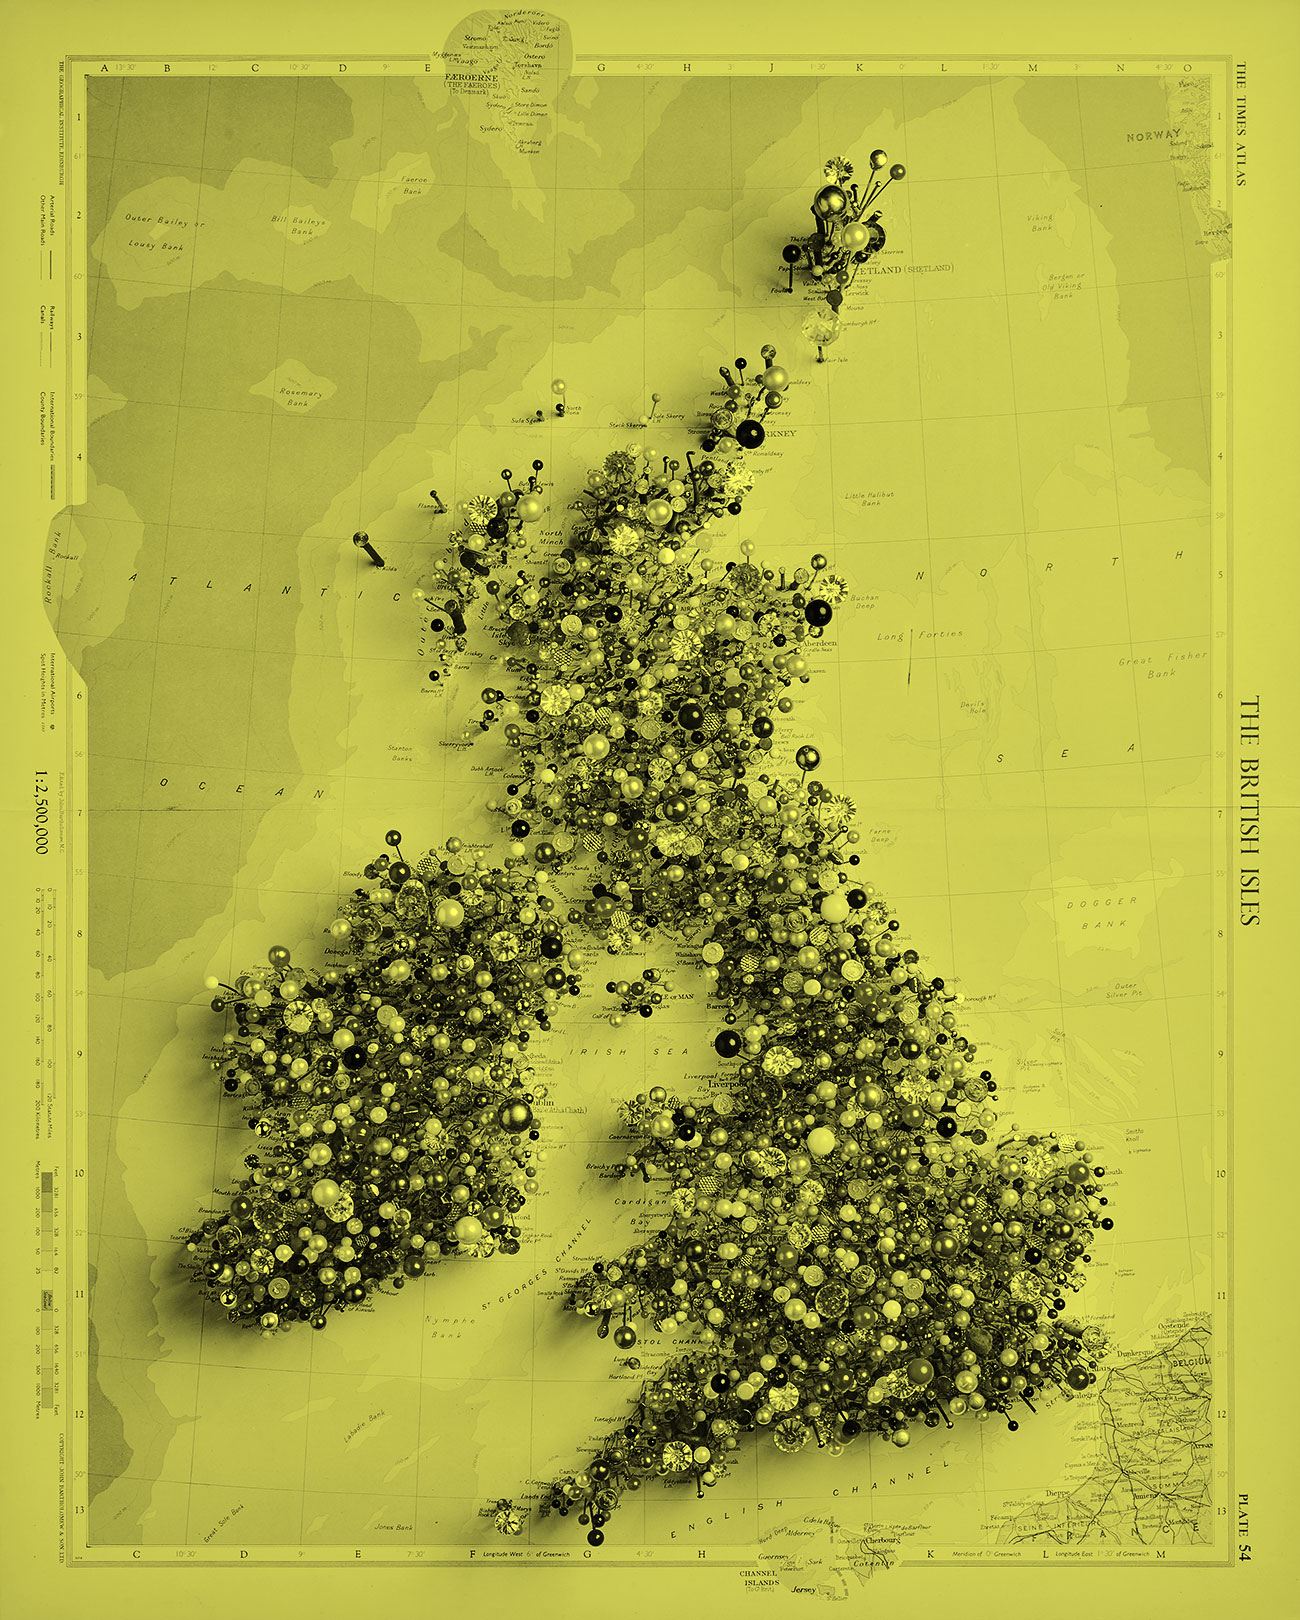 Chris Kenny Fetish Map of the British Isles©Chris Kenny, photo Gabriel Kenny Ryder